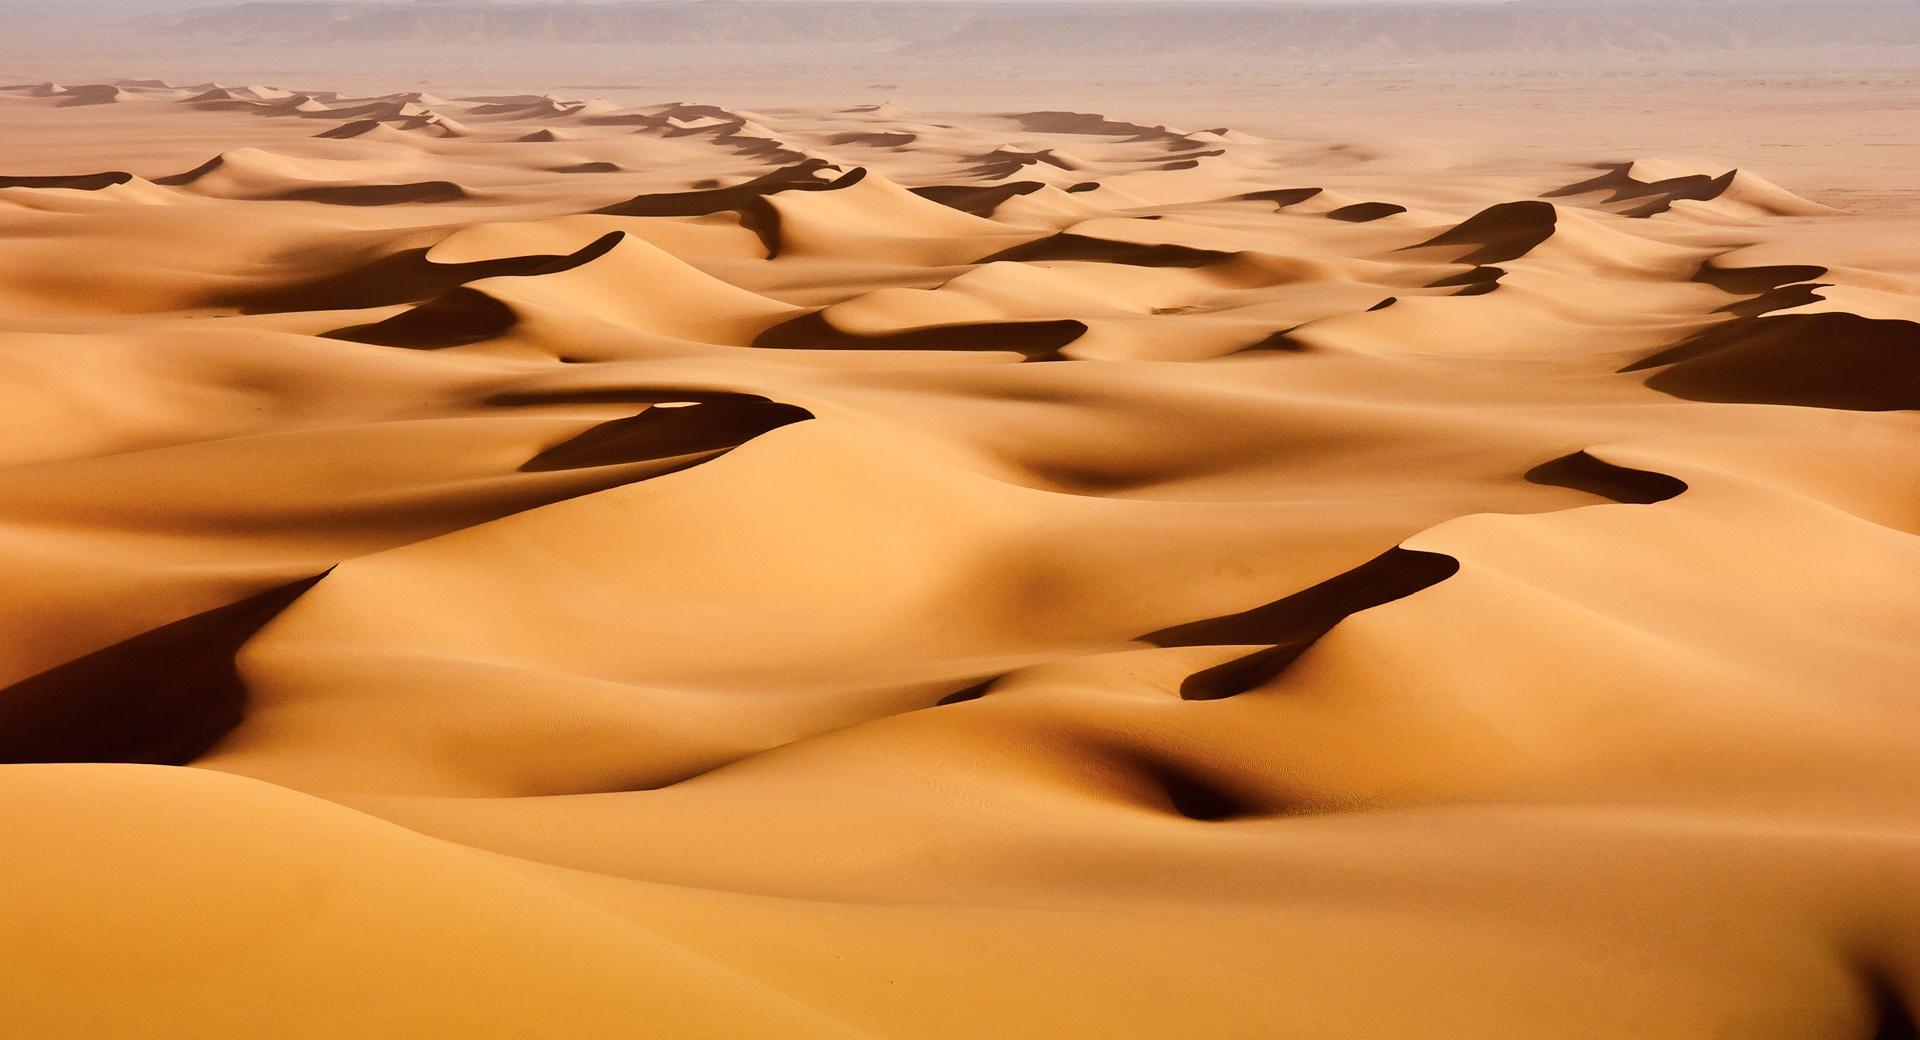 Desert Sand Dunes wallpapers HD quality